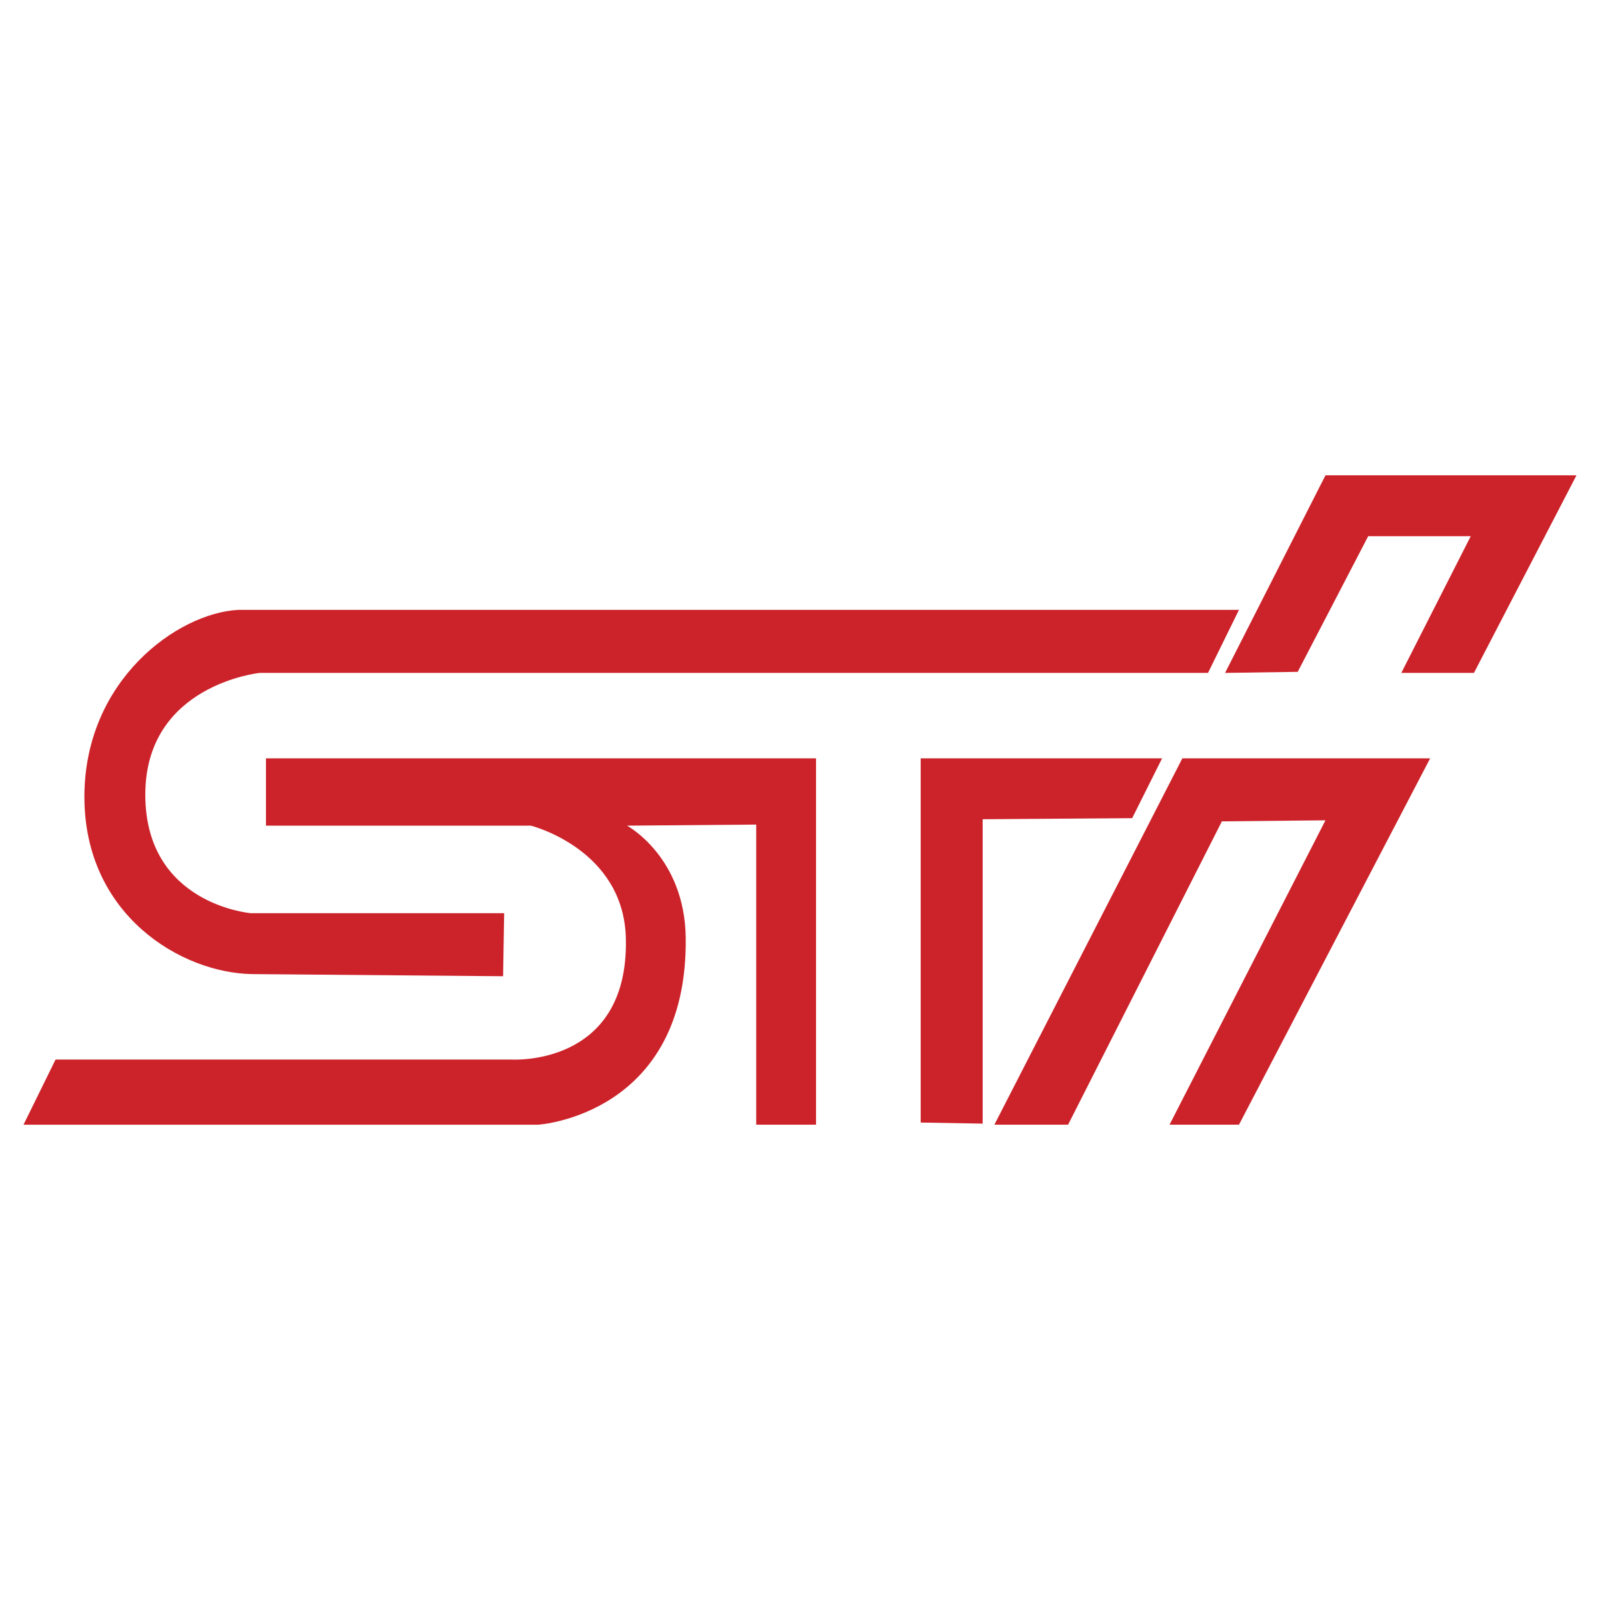 Sti Logo